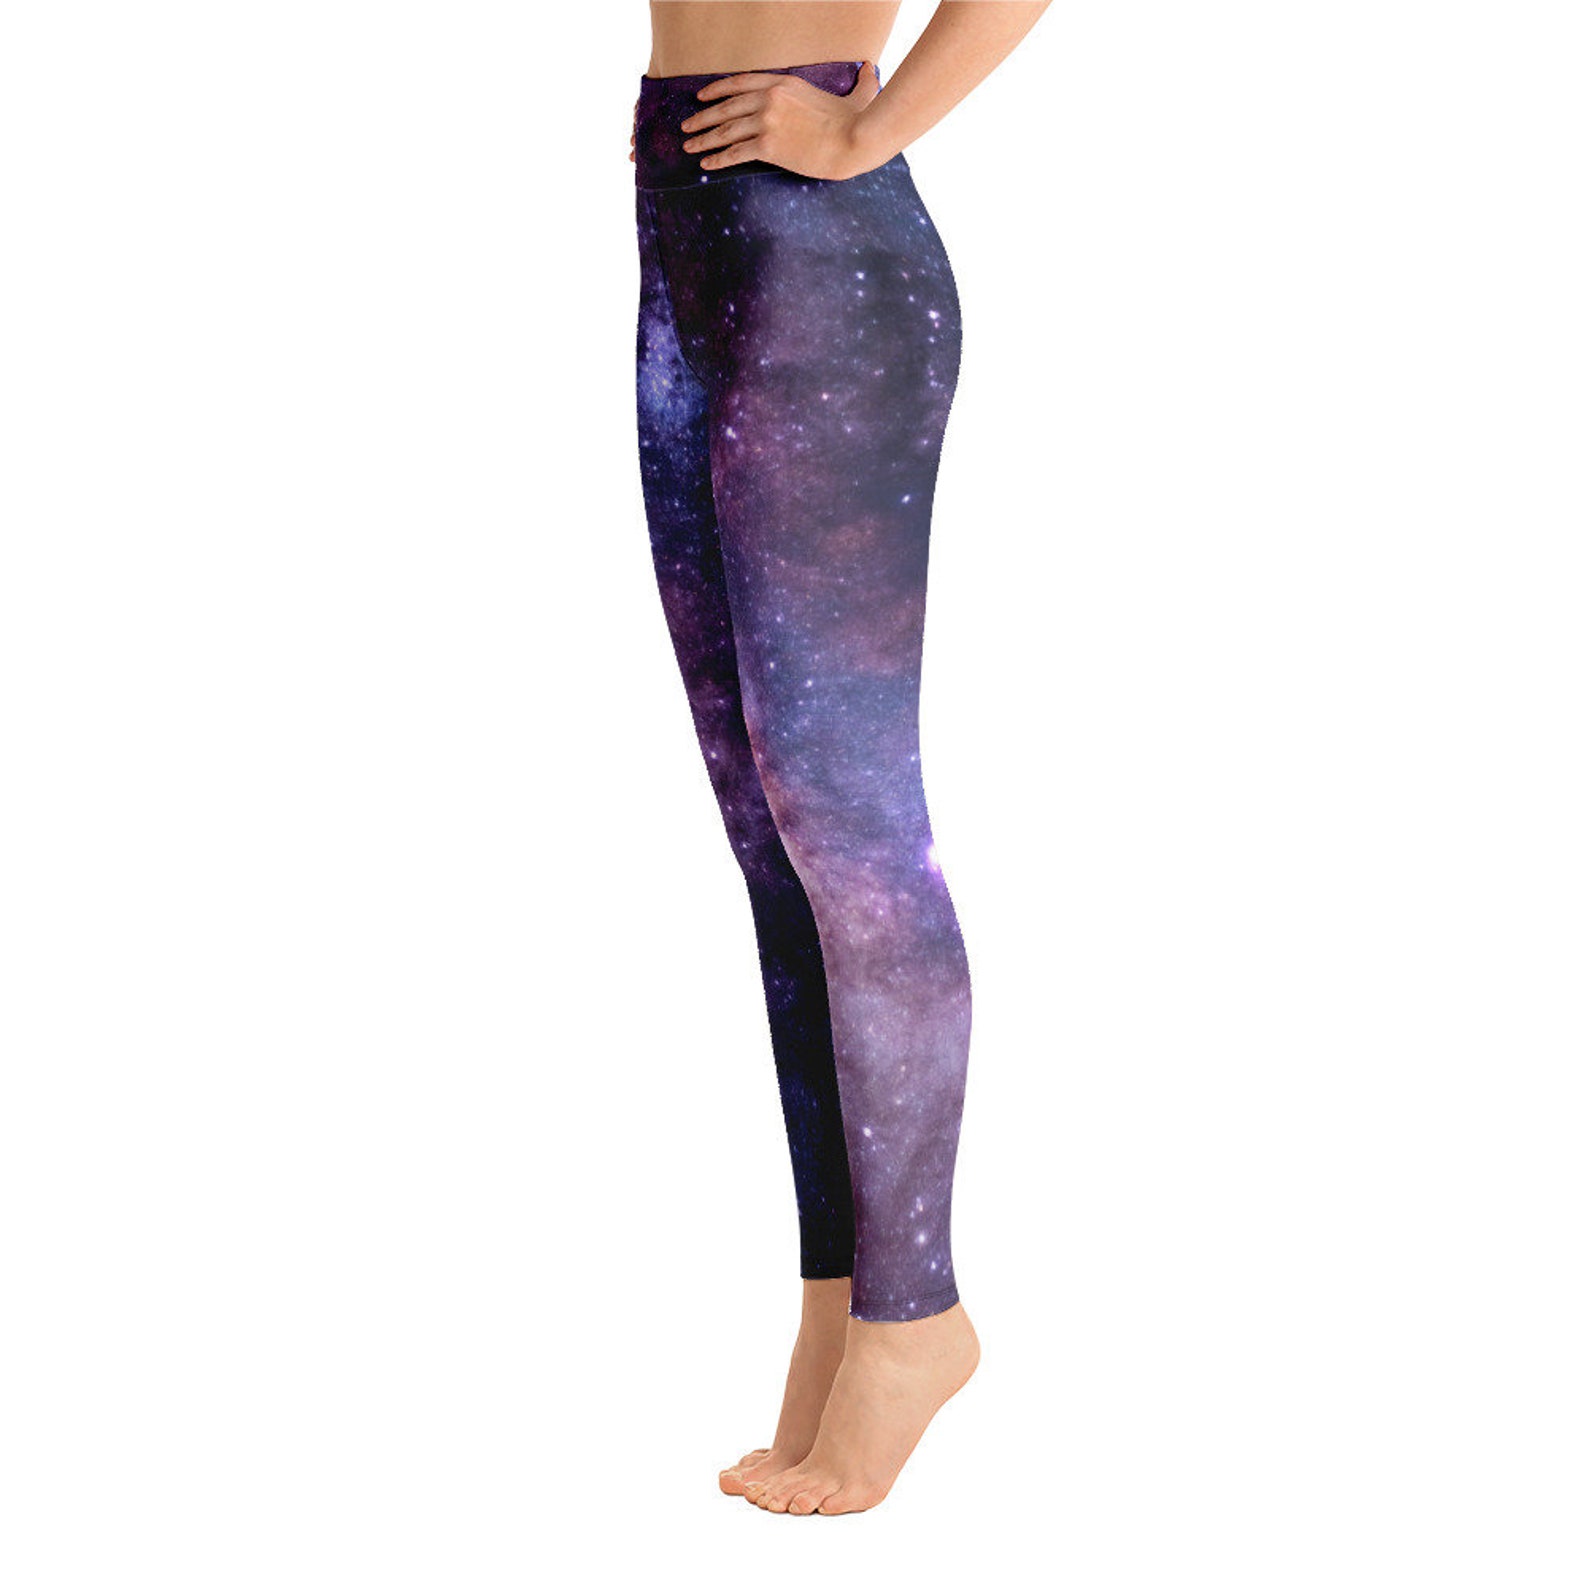 Celestial Leggings Milky Way Leggings Galaxy Yoga Pants - Etsy